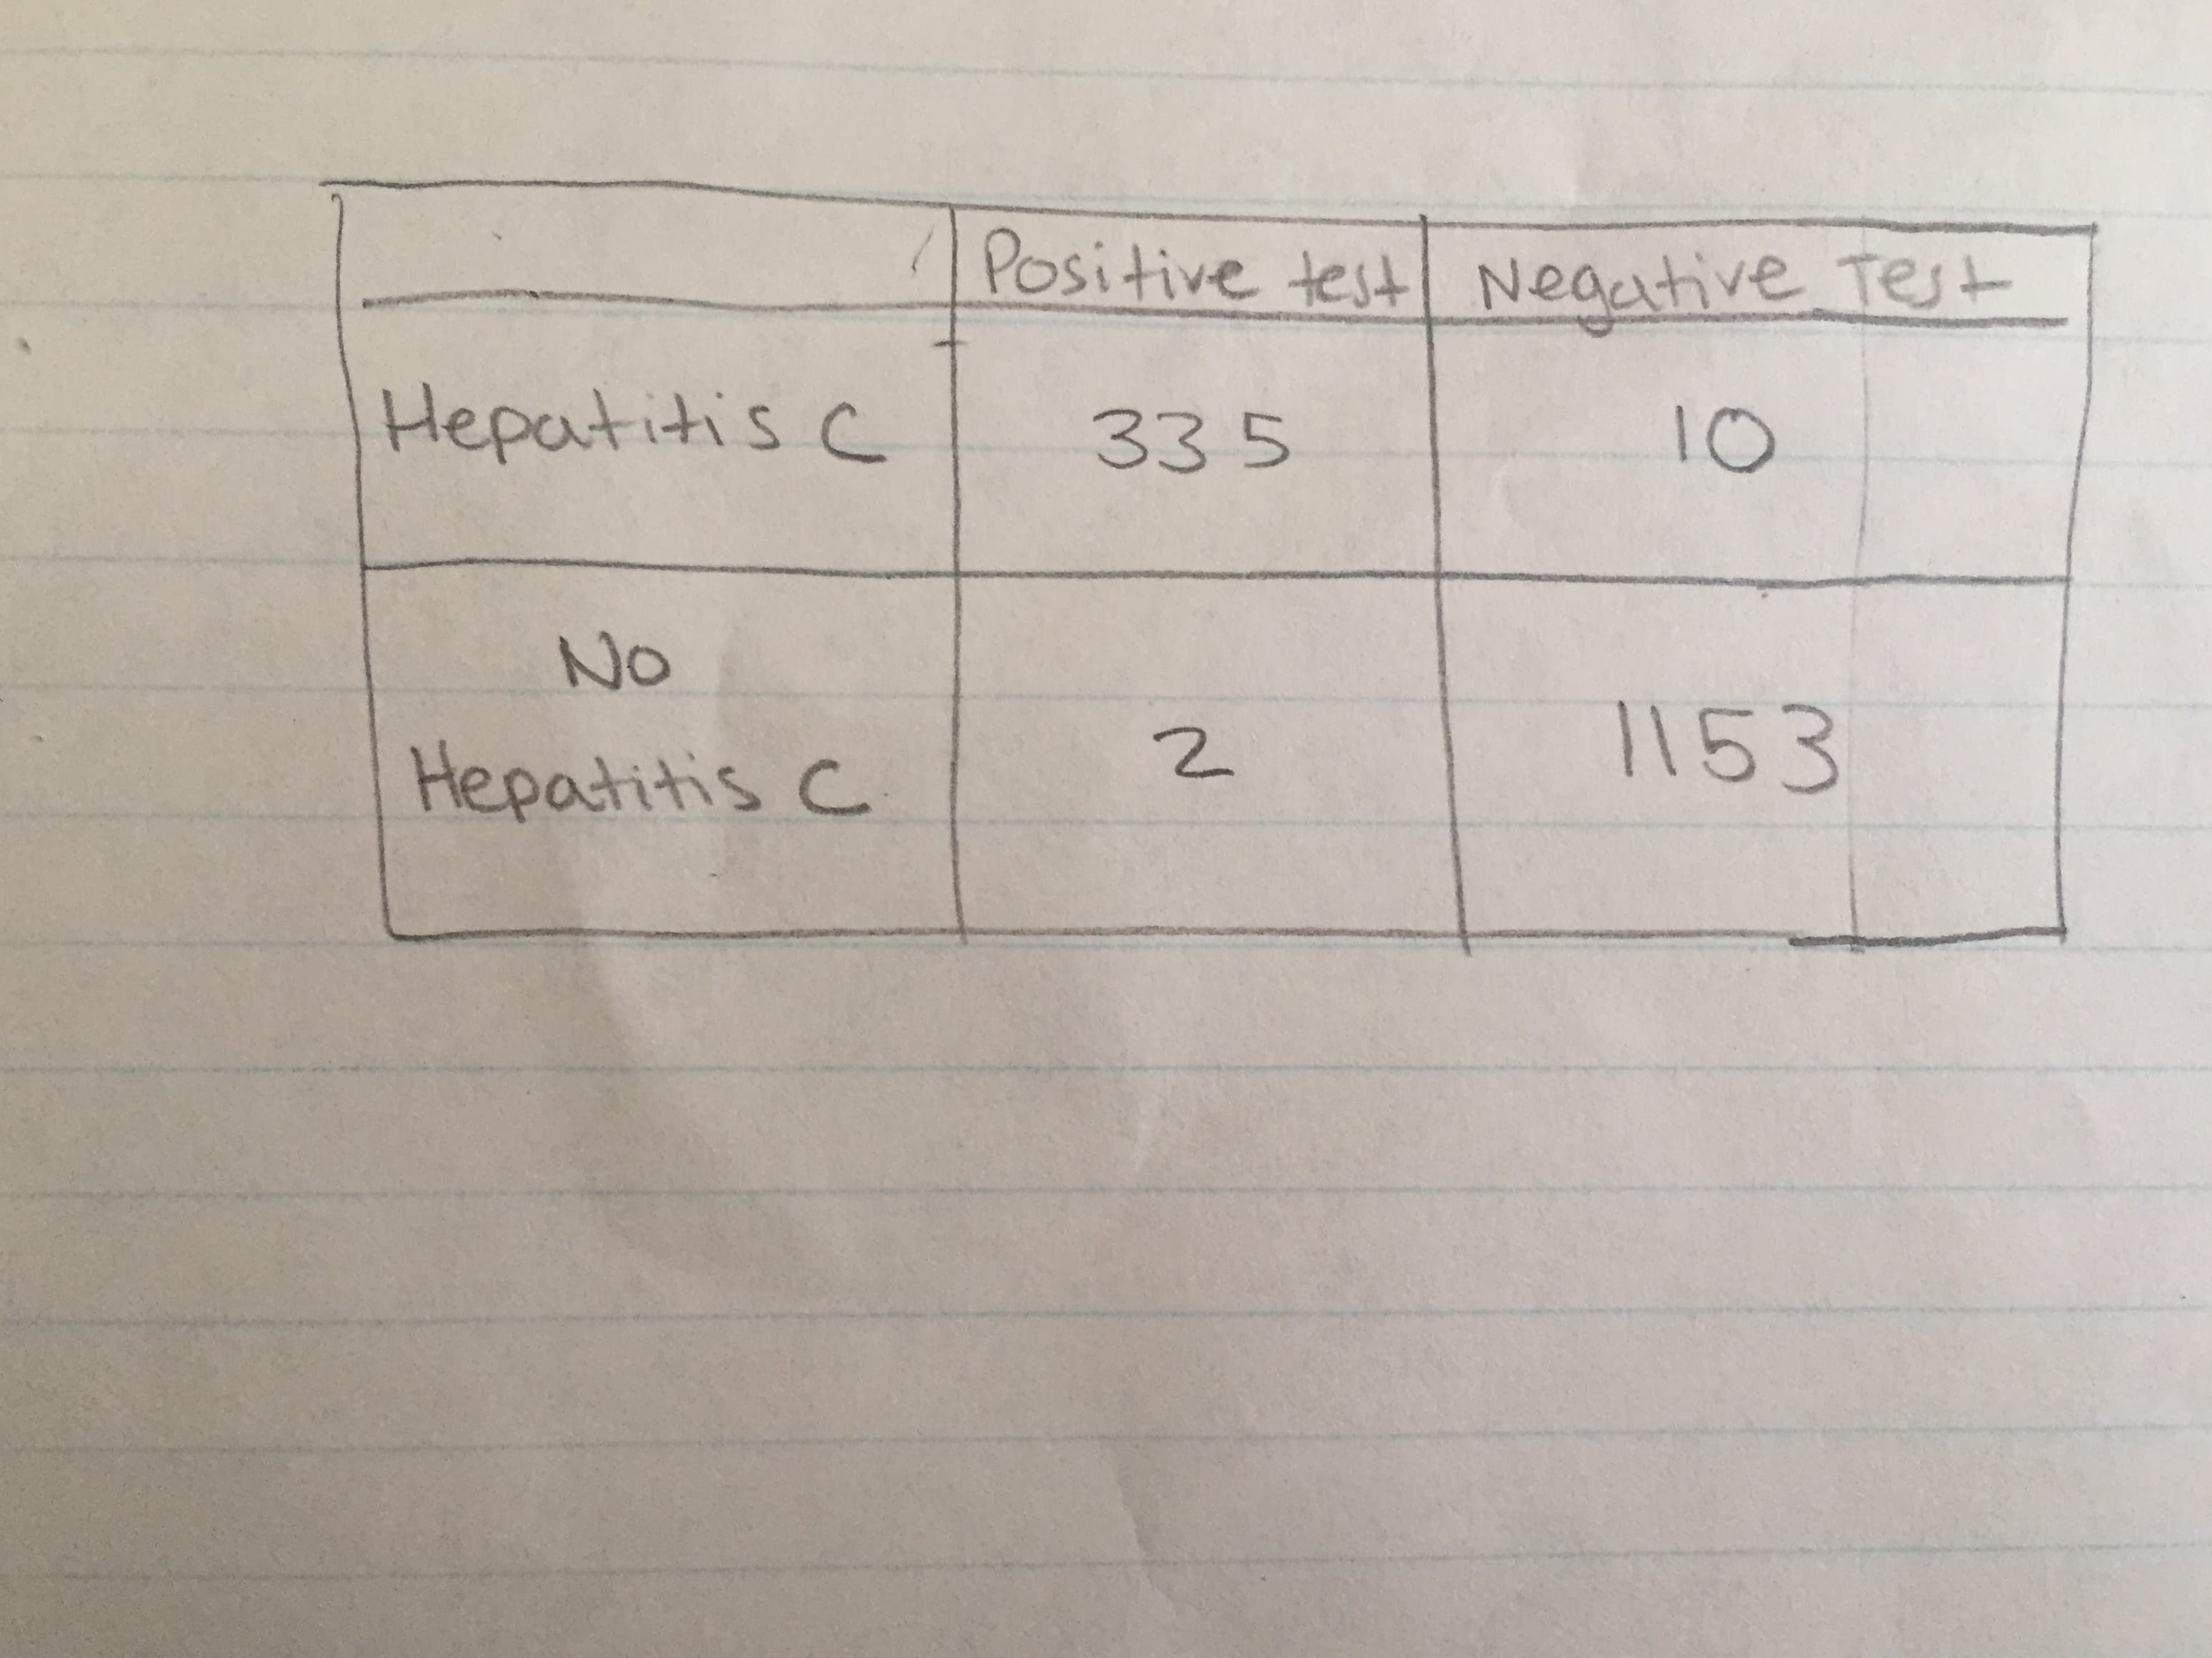 Positive test Neaahive Test
Hepatitis c
33 5
No
1153
Hepatitis c
N
